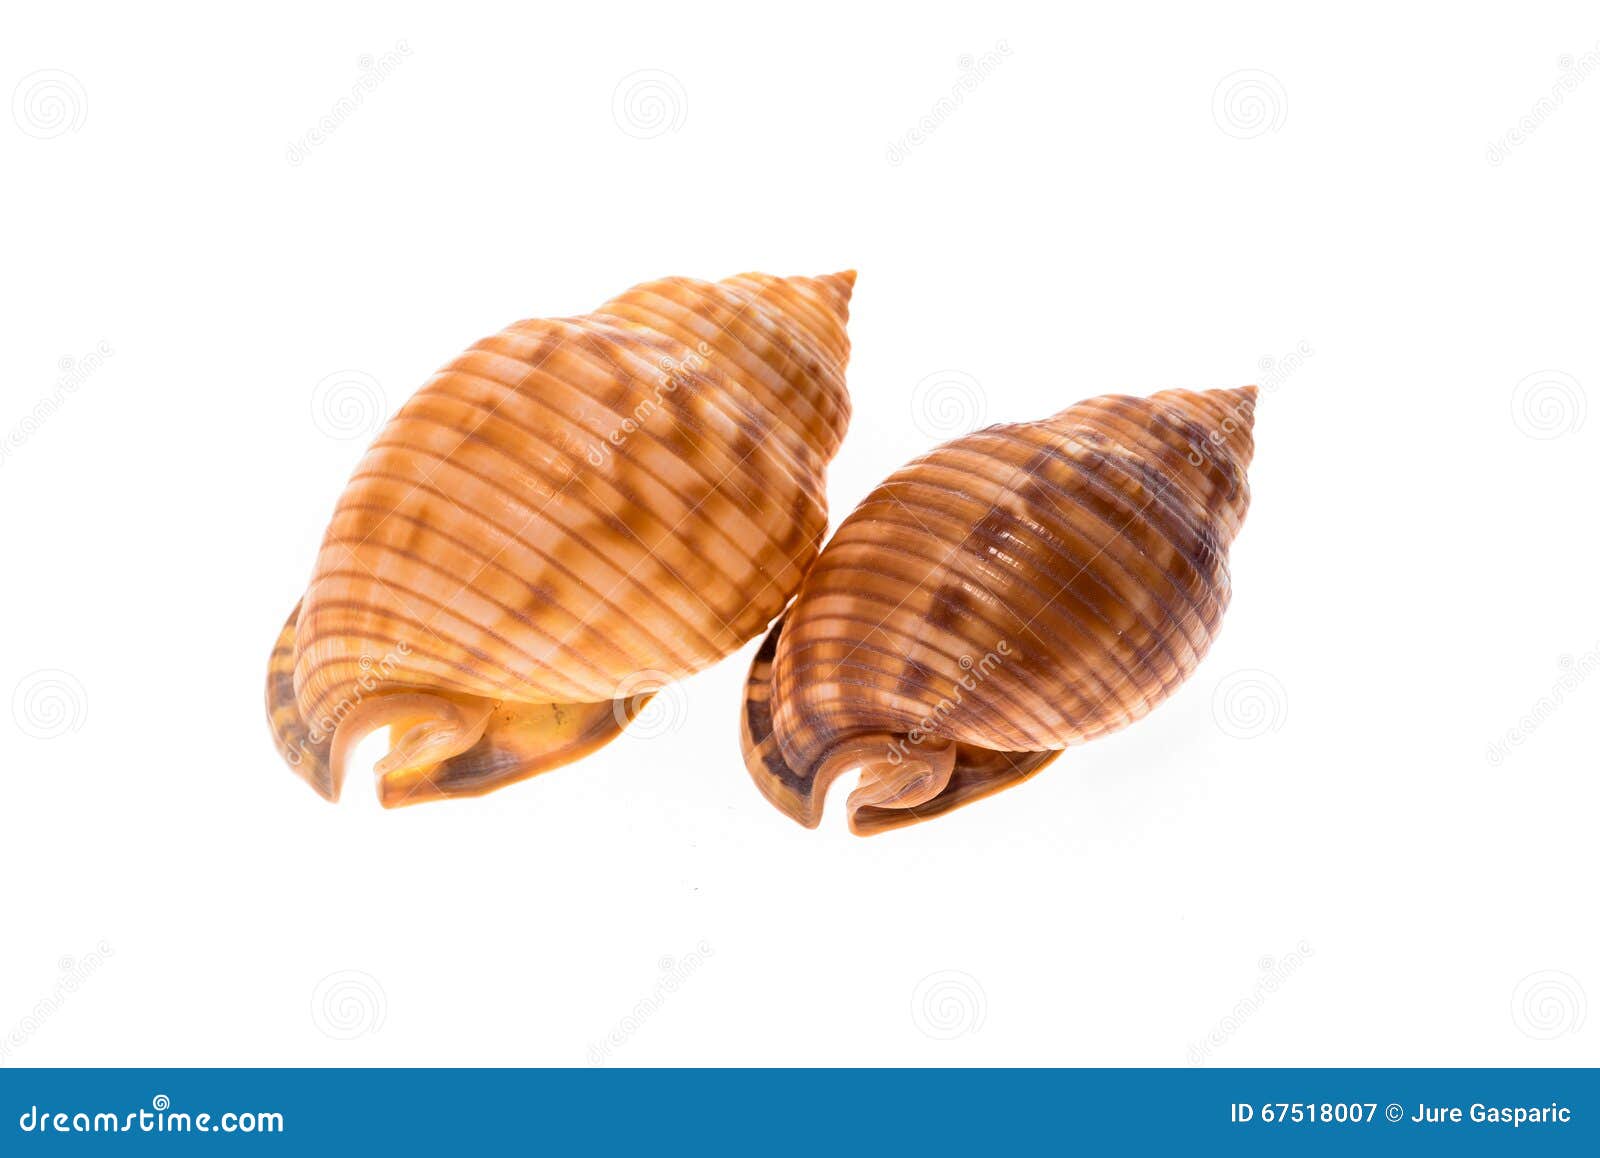 two helmet sea shells - galeodea echinophora. empty house of sea